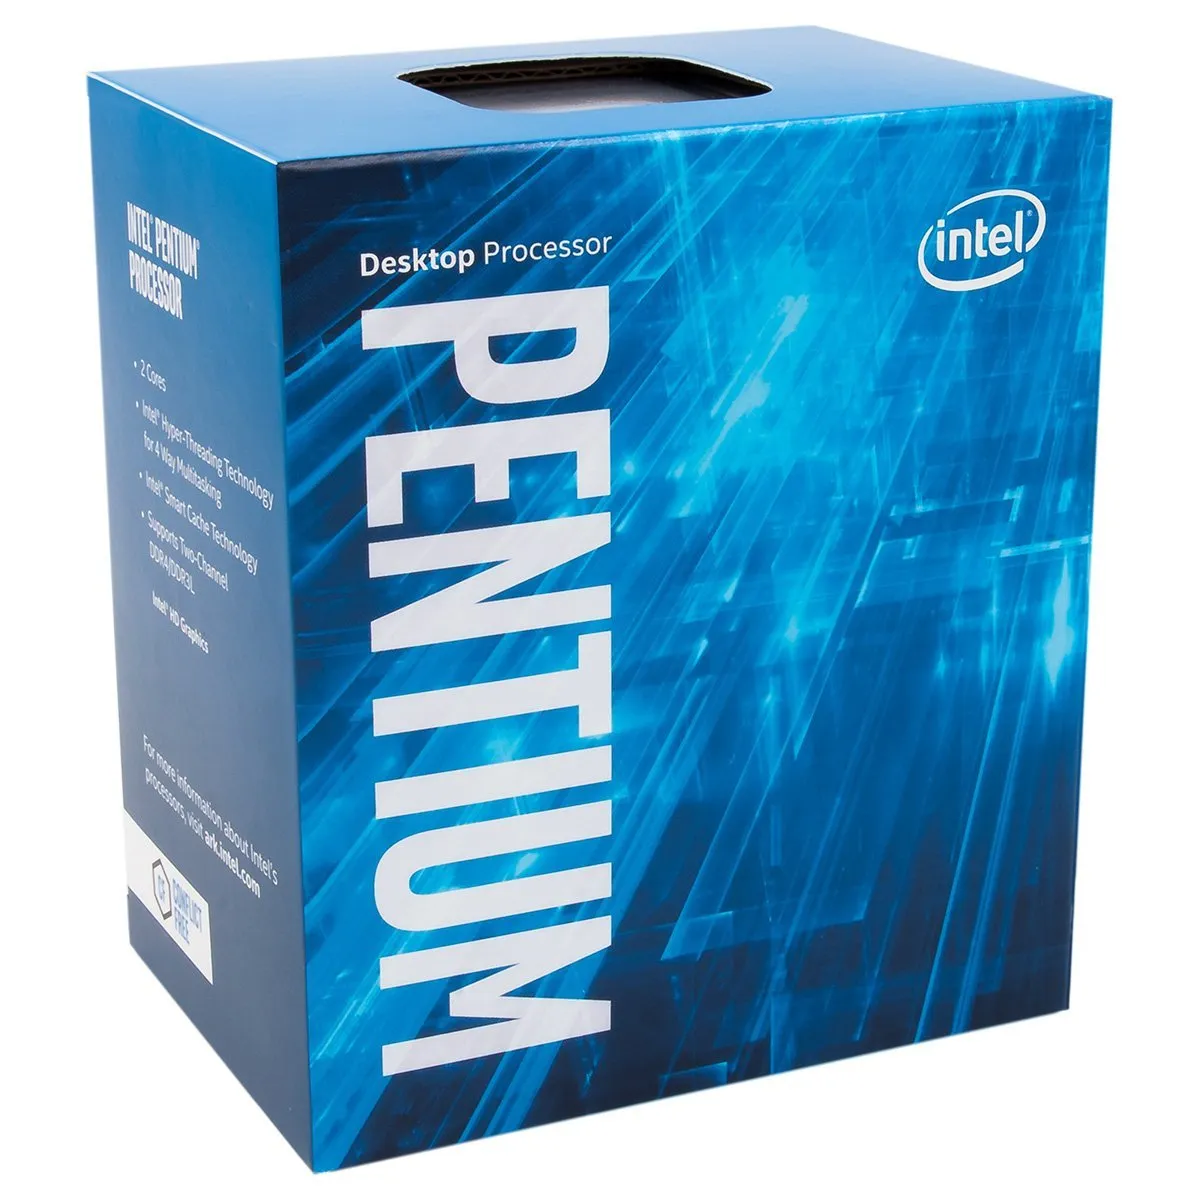 Intel Pentium Dual Core 3.6 GHz CPU G4600